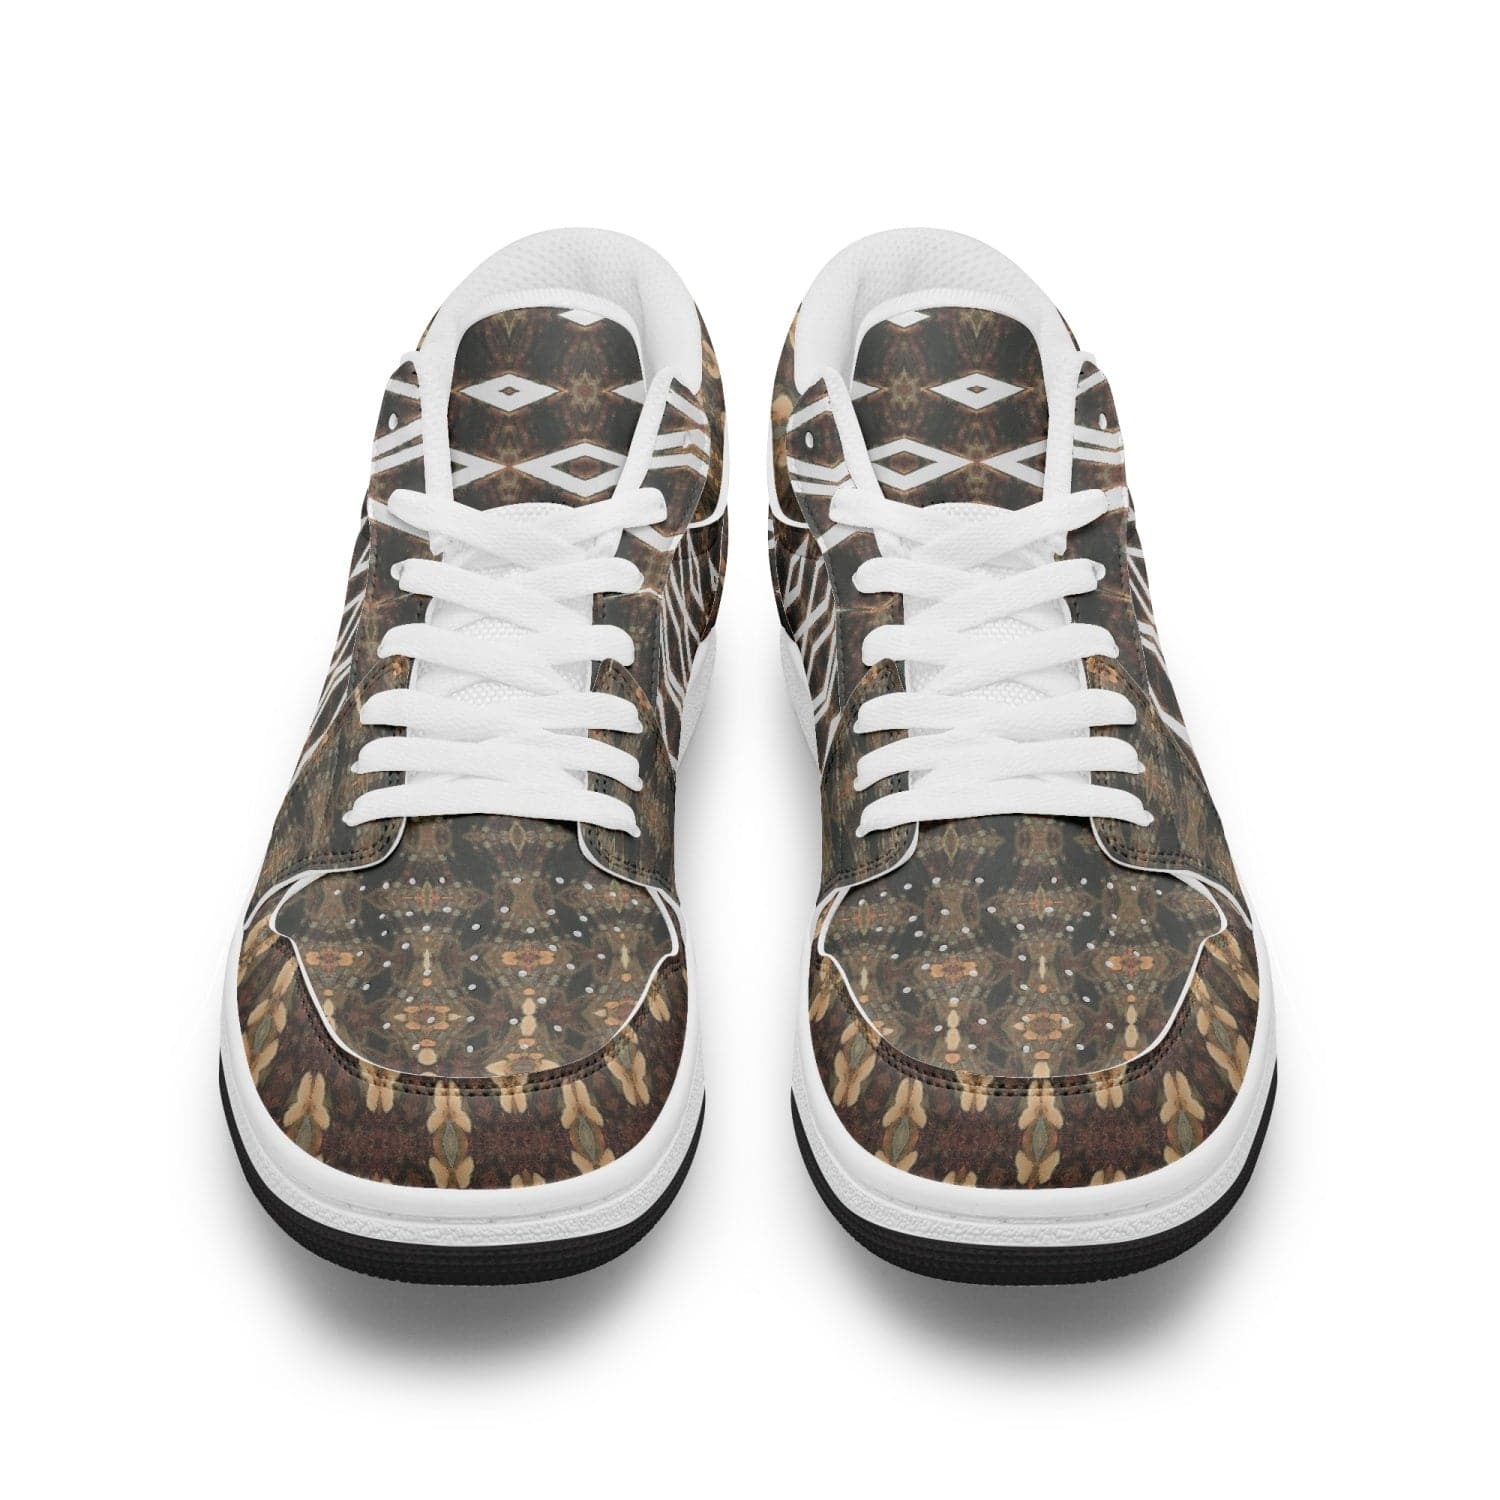 The Art of Walking, Trendy Brown patterned  Low-Top AJ1 Leather Sneakers, by Sensus Studio Design